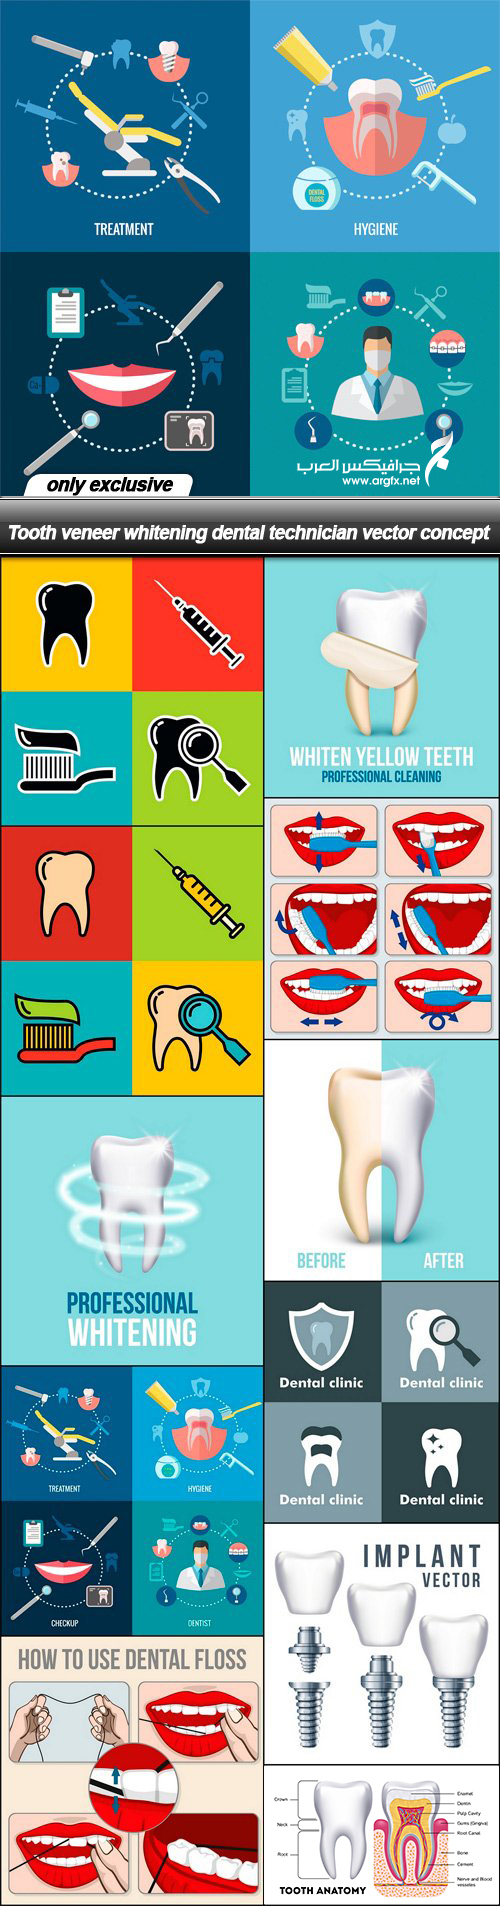  Tooth veneer whitening dental technician vector concept - 11 EPS